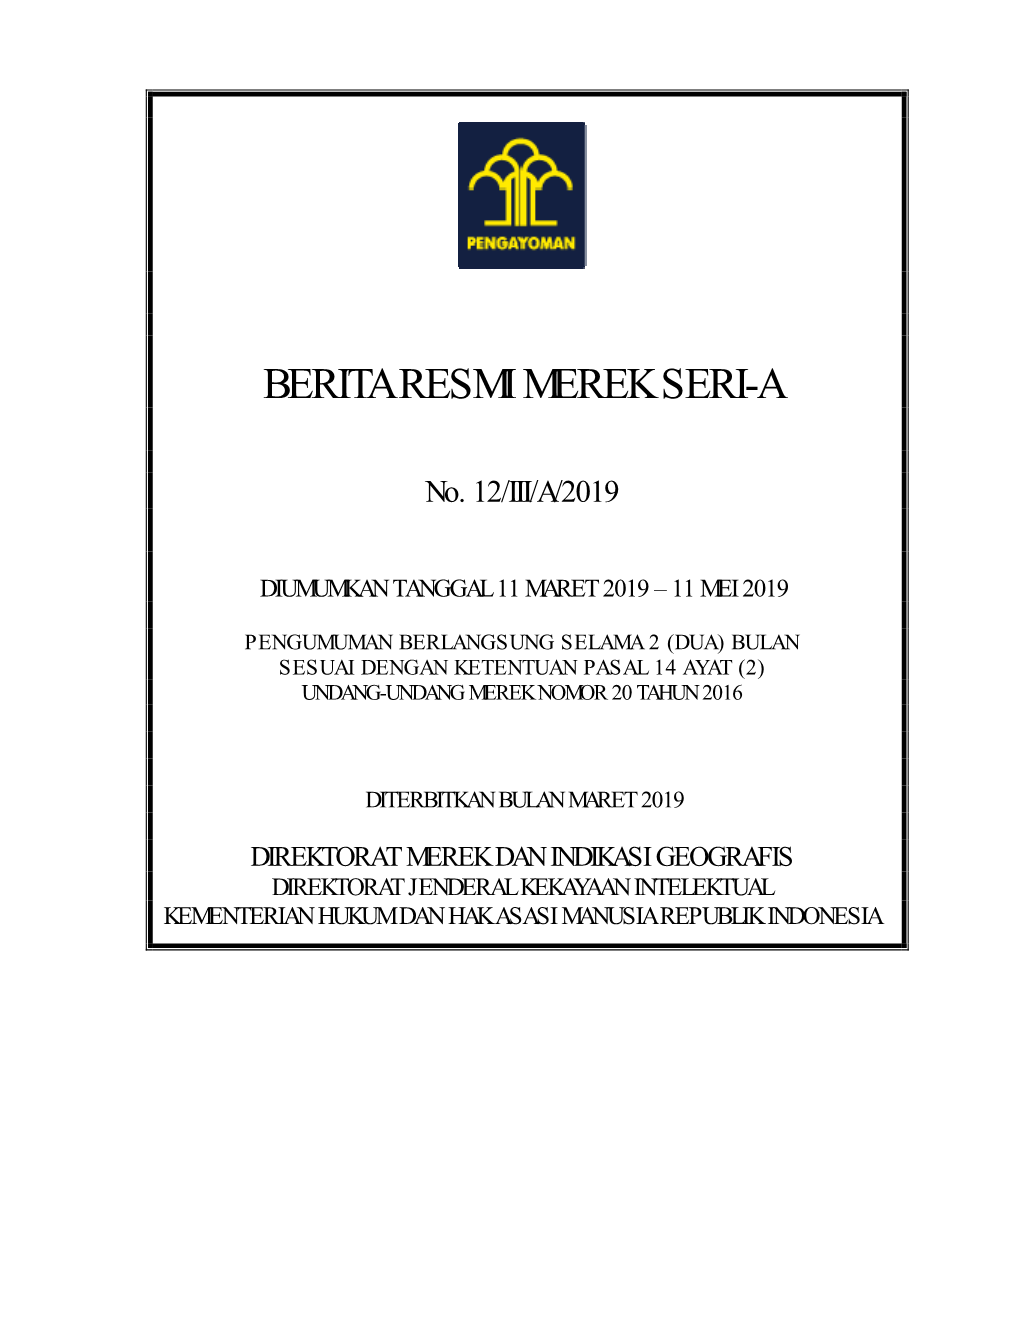 Berita Resmi Merek No. 12/III/A/2019